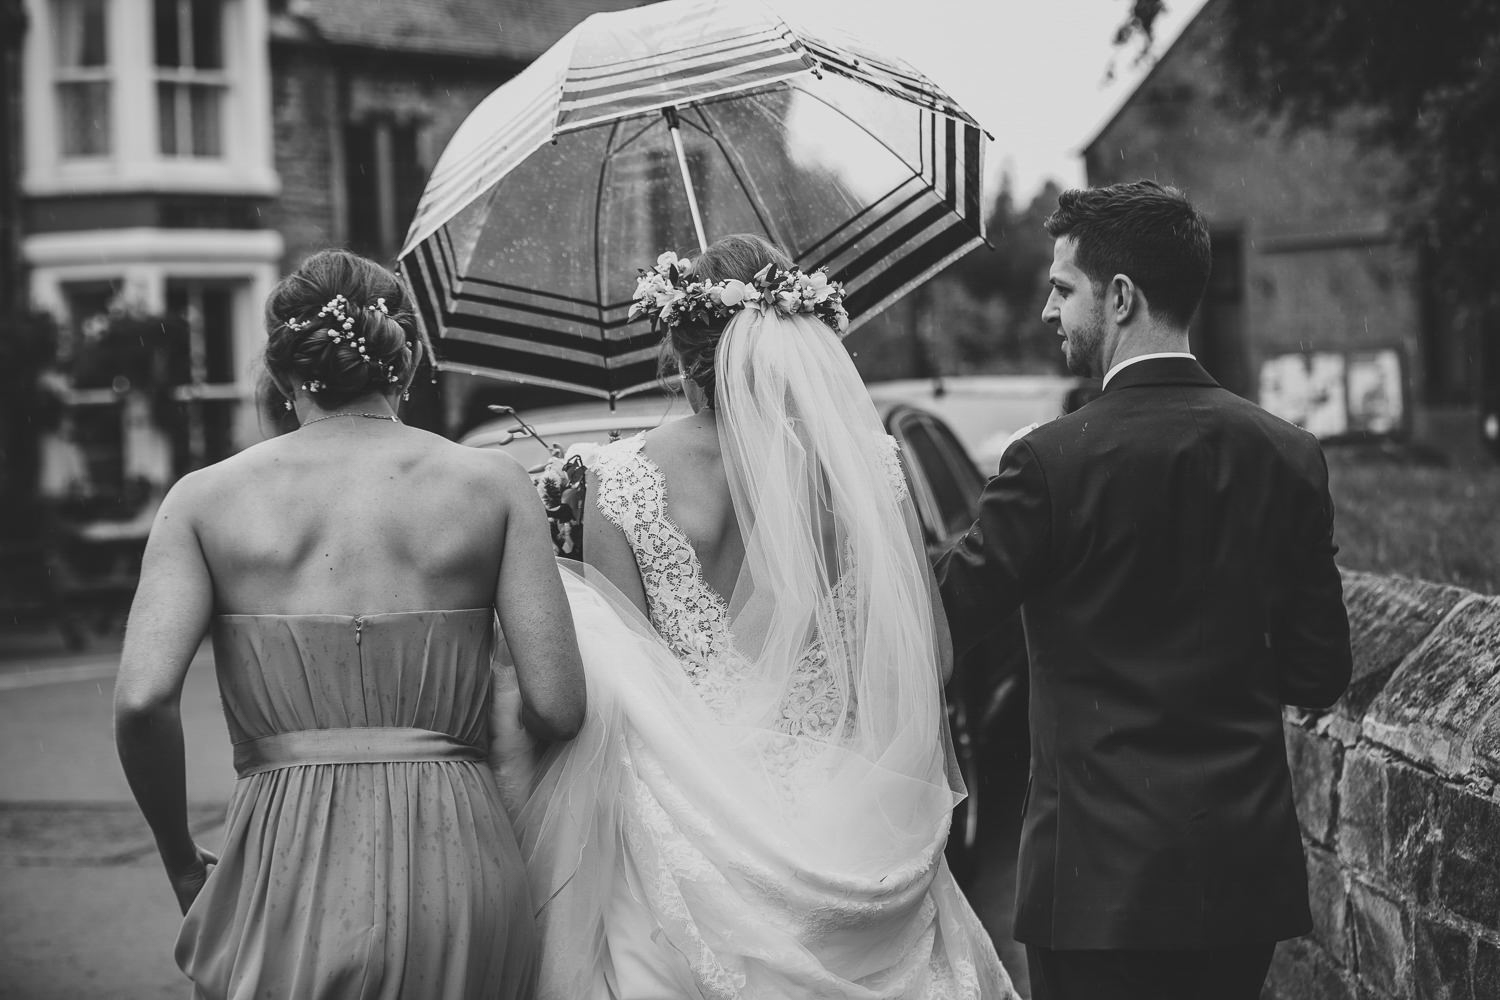 Bride, groom, bridesmaid walking away away, umbrella